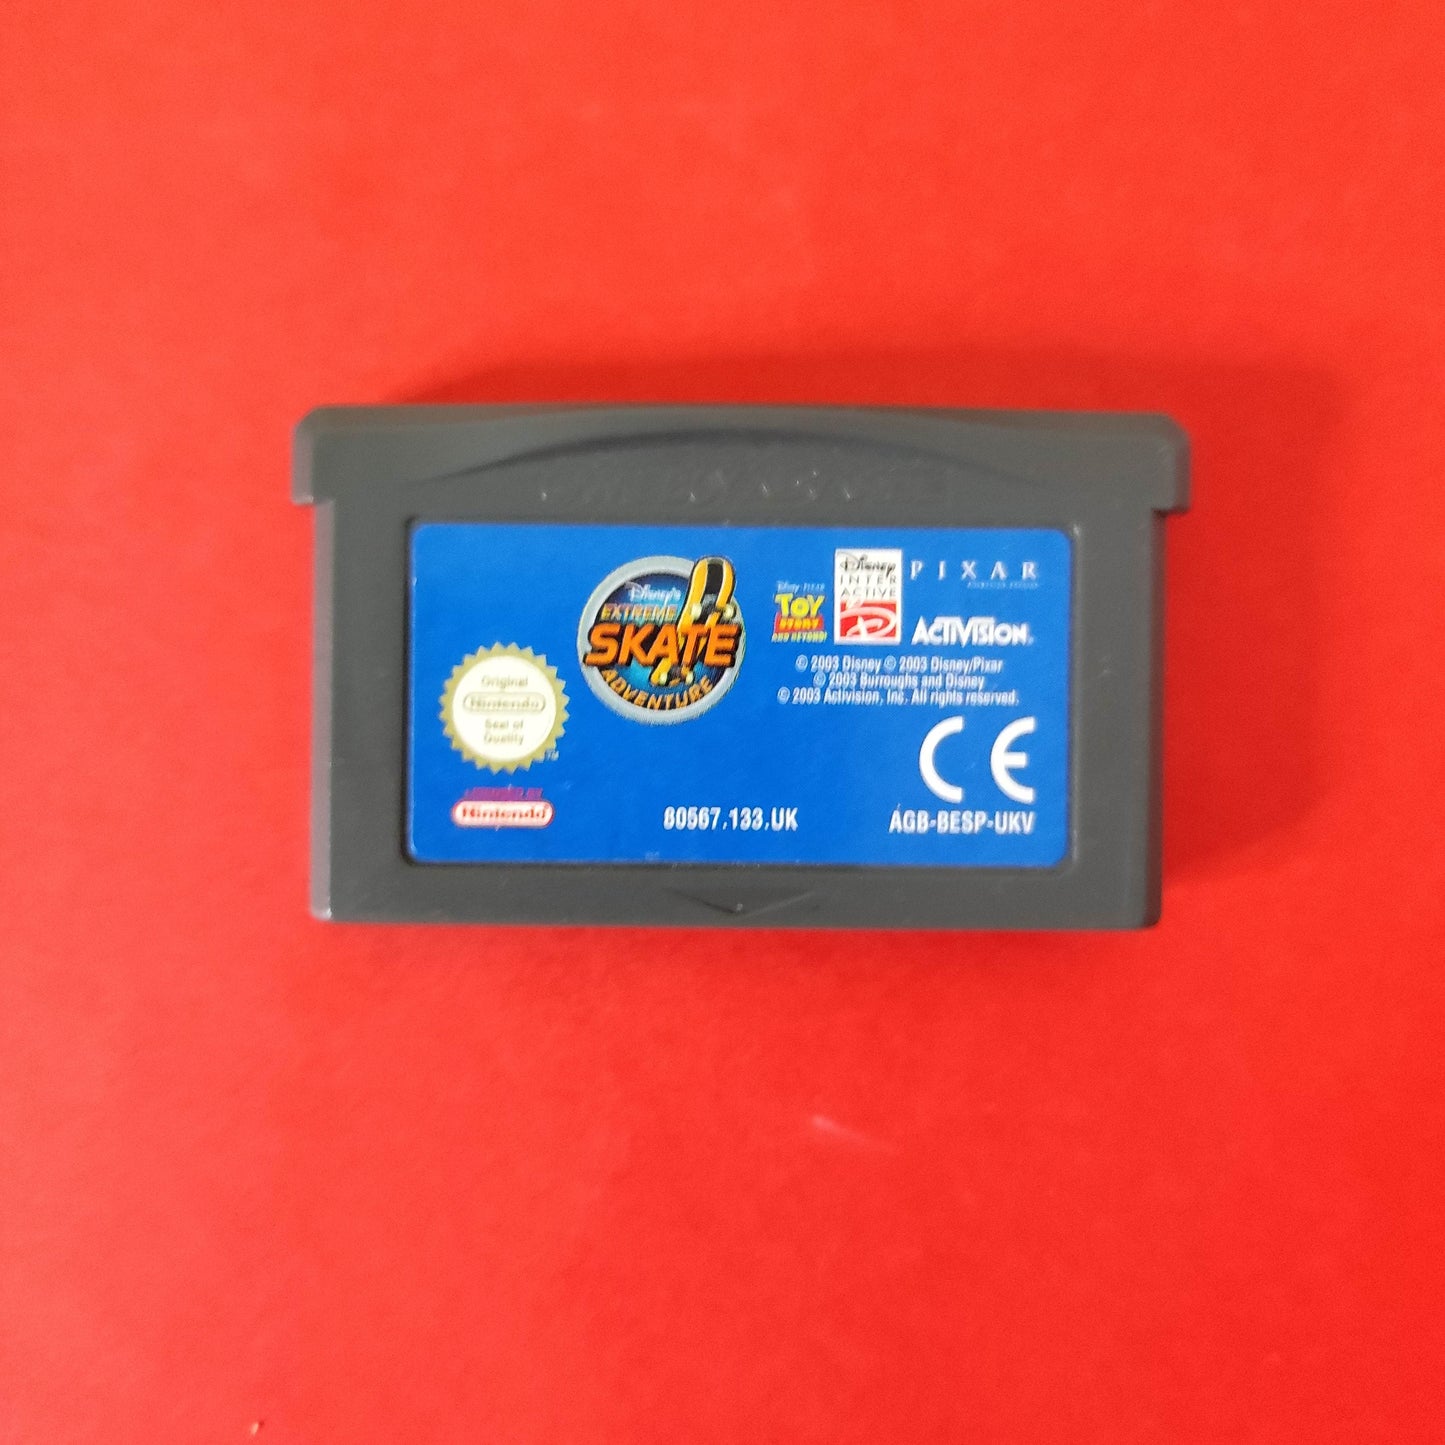 Disney - Skate - Nintendo Game Boy Advance - UK